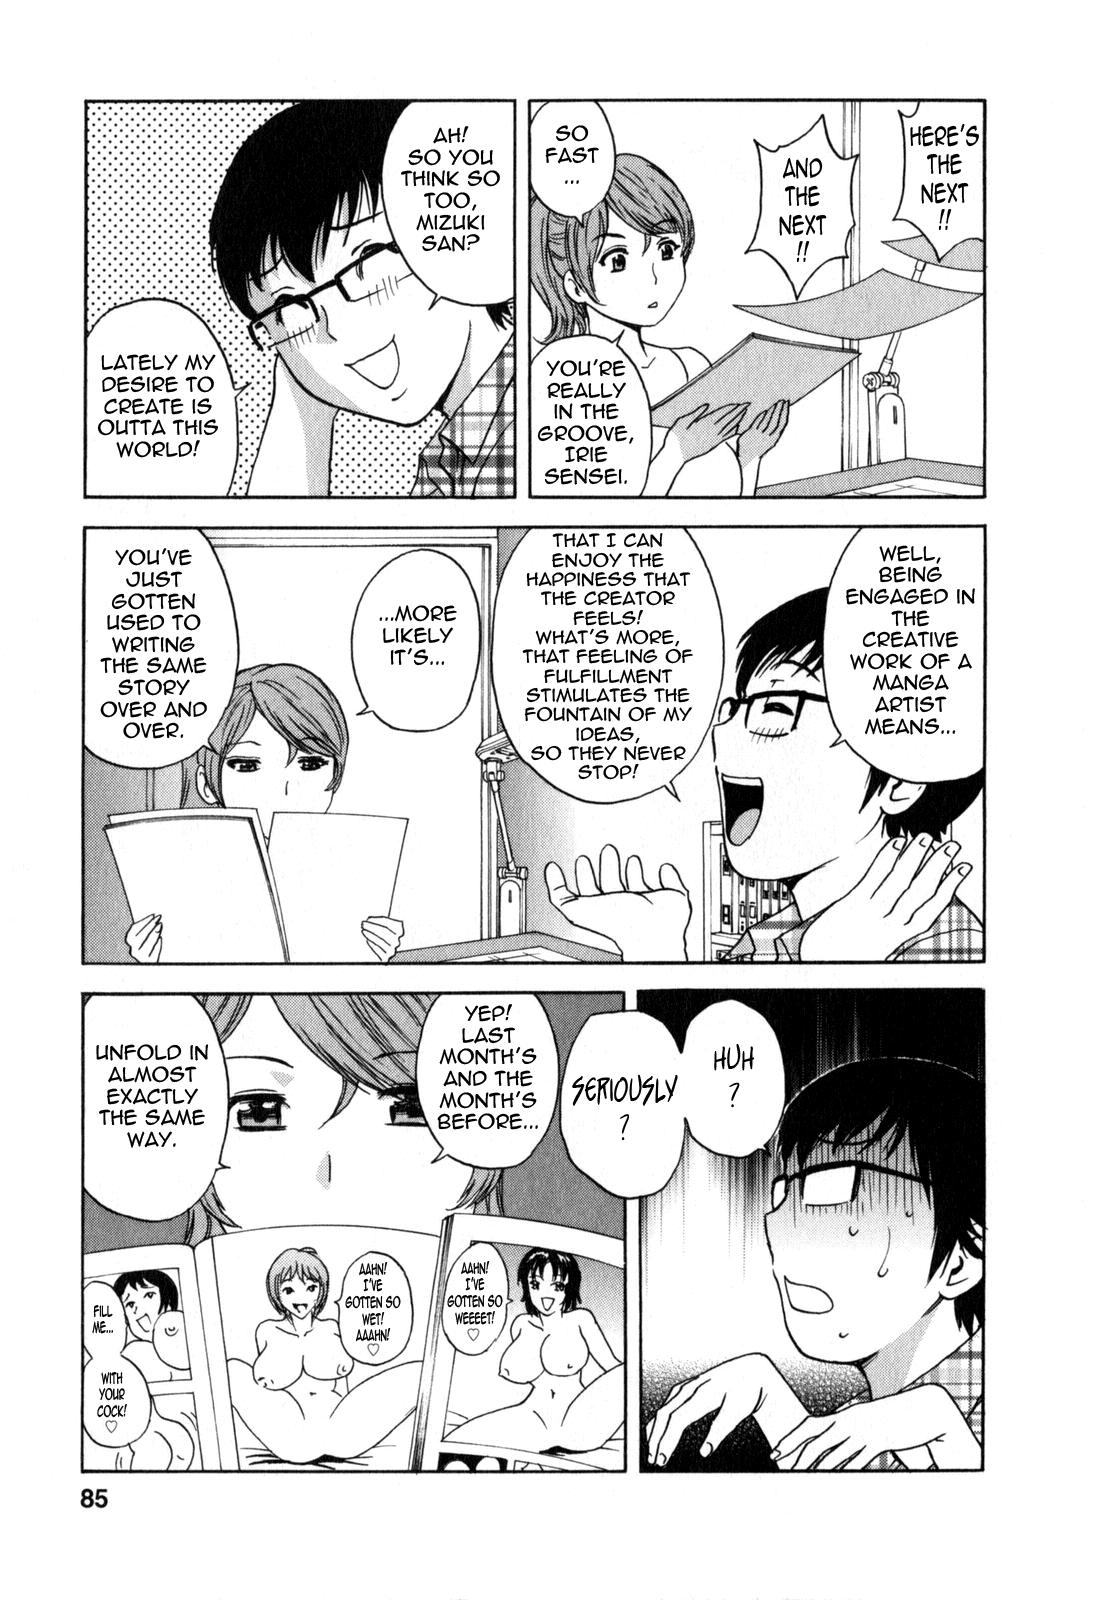 [Hidemaru] Life with Married Women Just Like a Manga 2 - Ch. 1-8 [English] {Tadanohito} 88